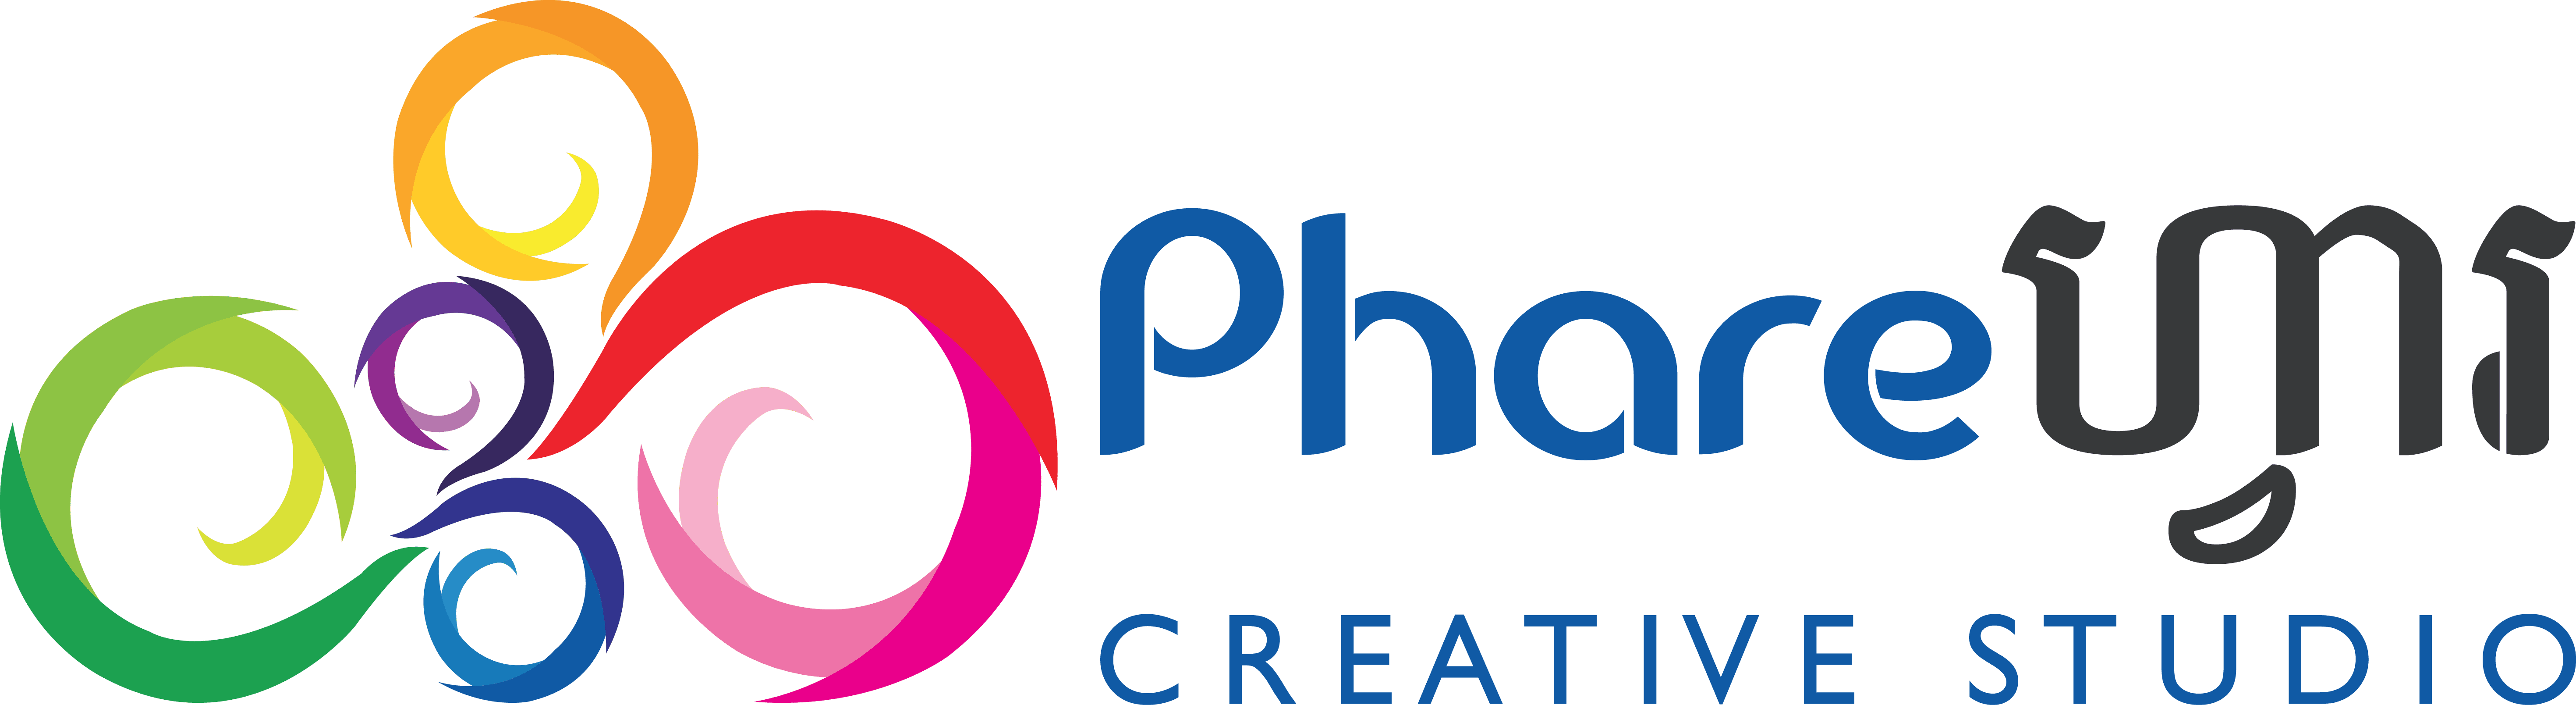 Phare Creative Studio - Cambodian Creations for Social Good